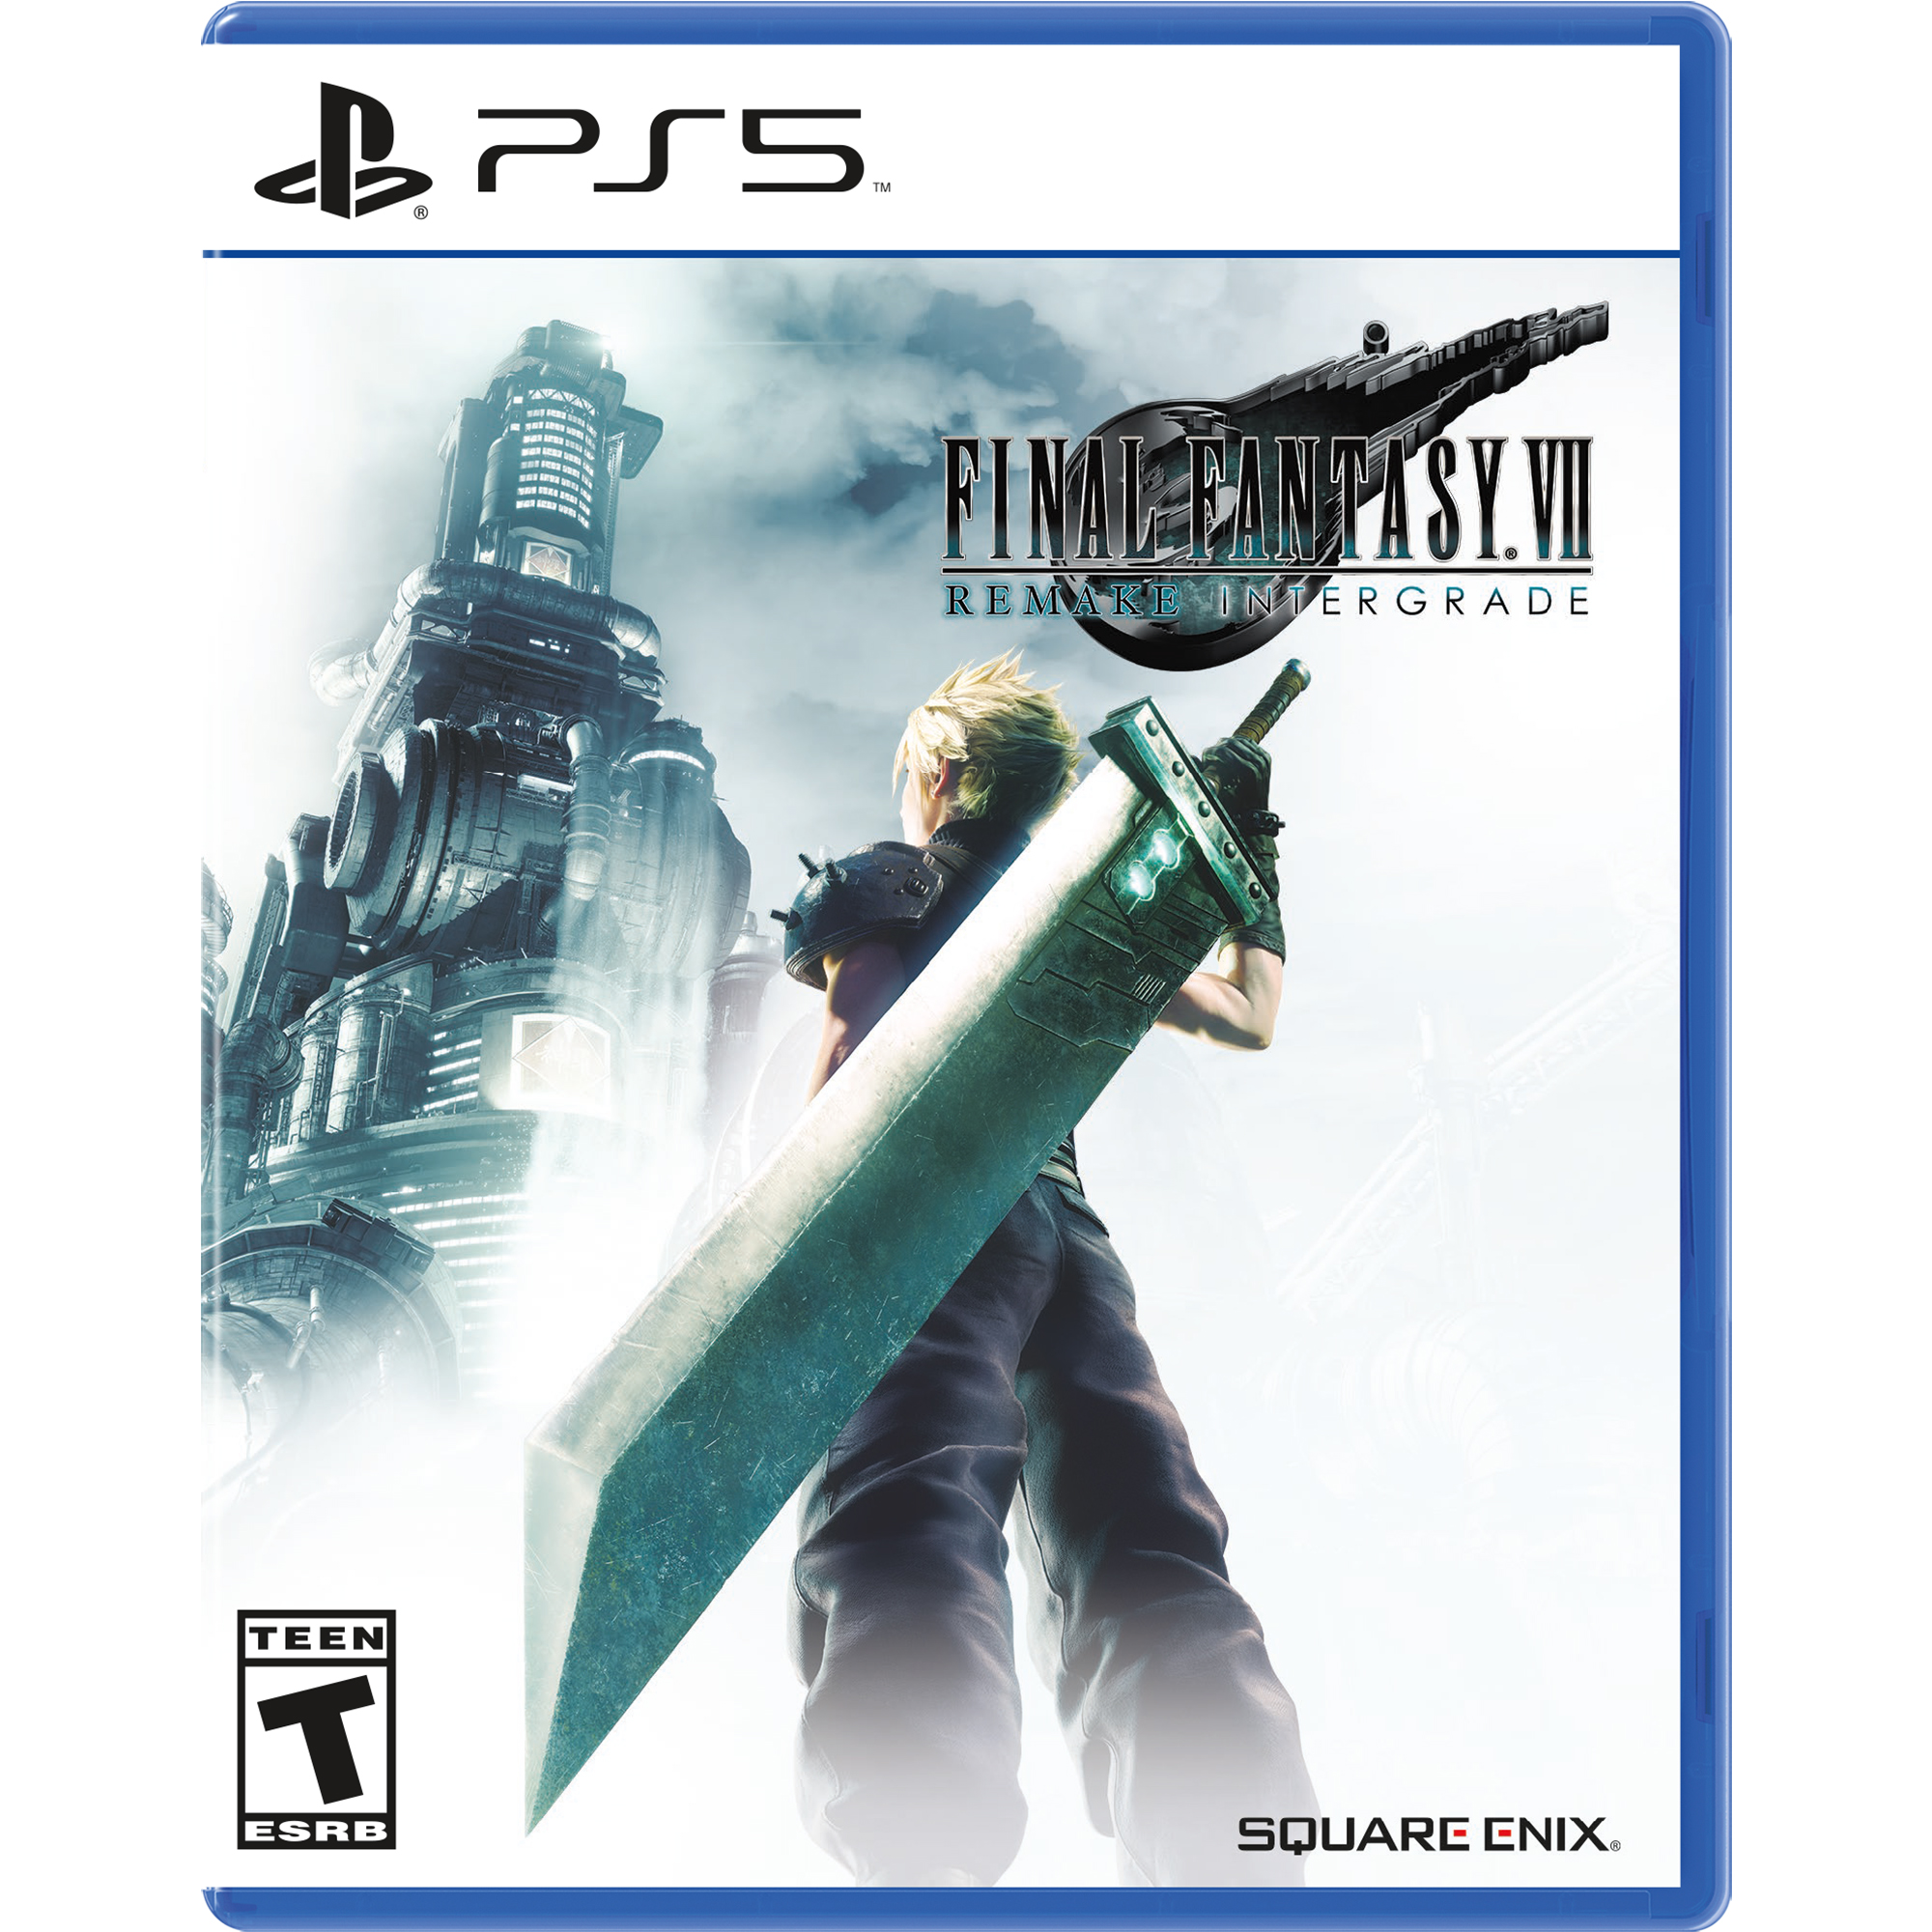 Final Fantasy VII Remake Intergrade (PS5) $20 + s/h at Walmart